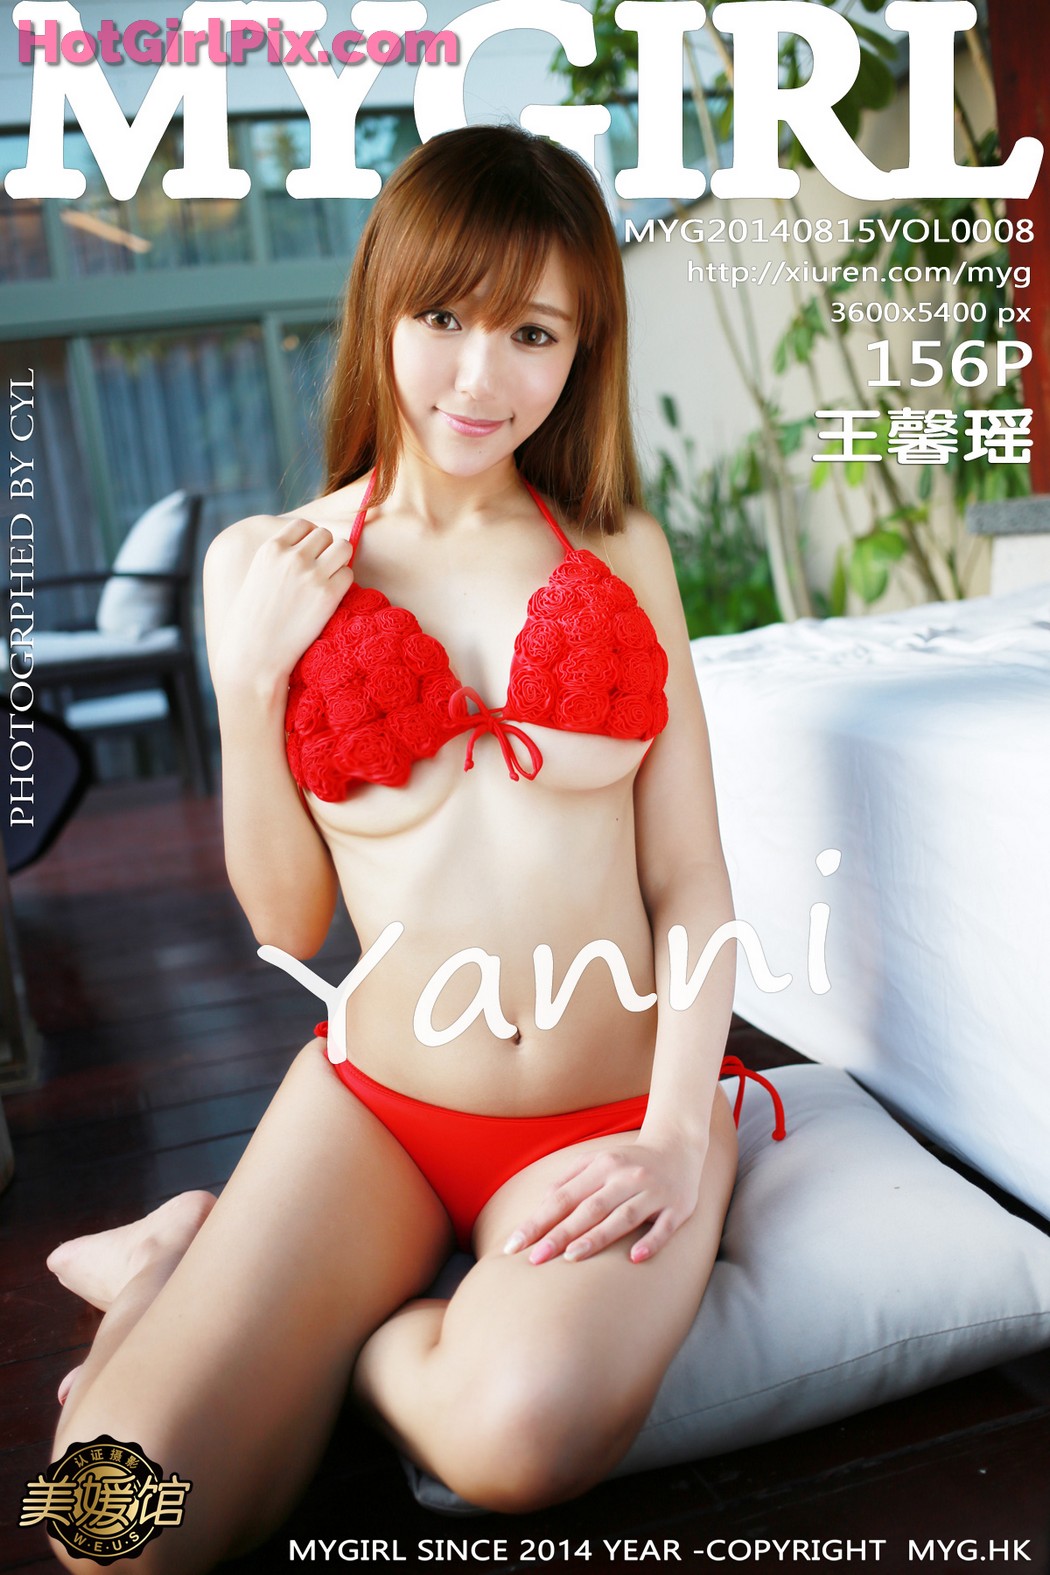 [MyGirl] Vol.008 Wang Xin Yao 王馨瑶yanni Cover Photo